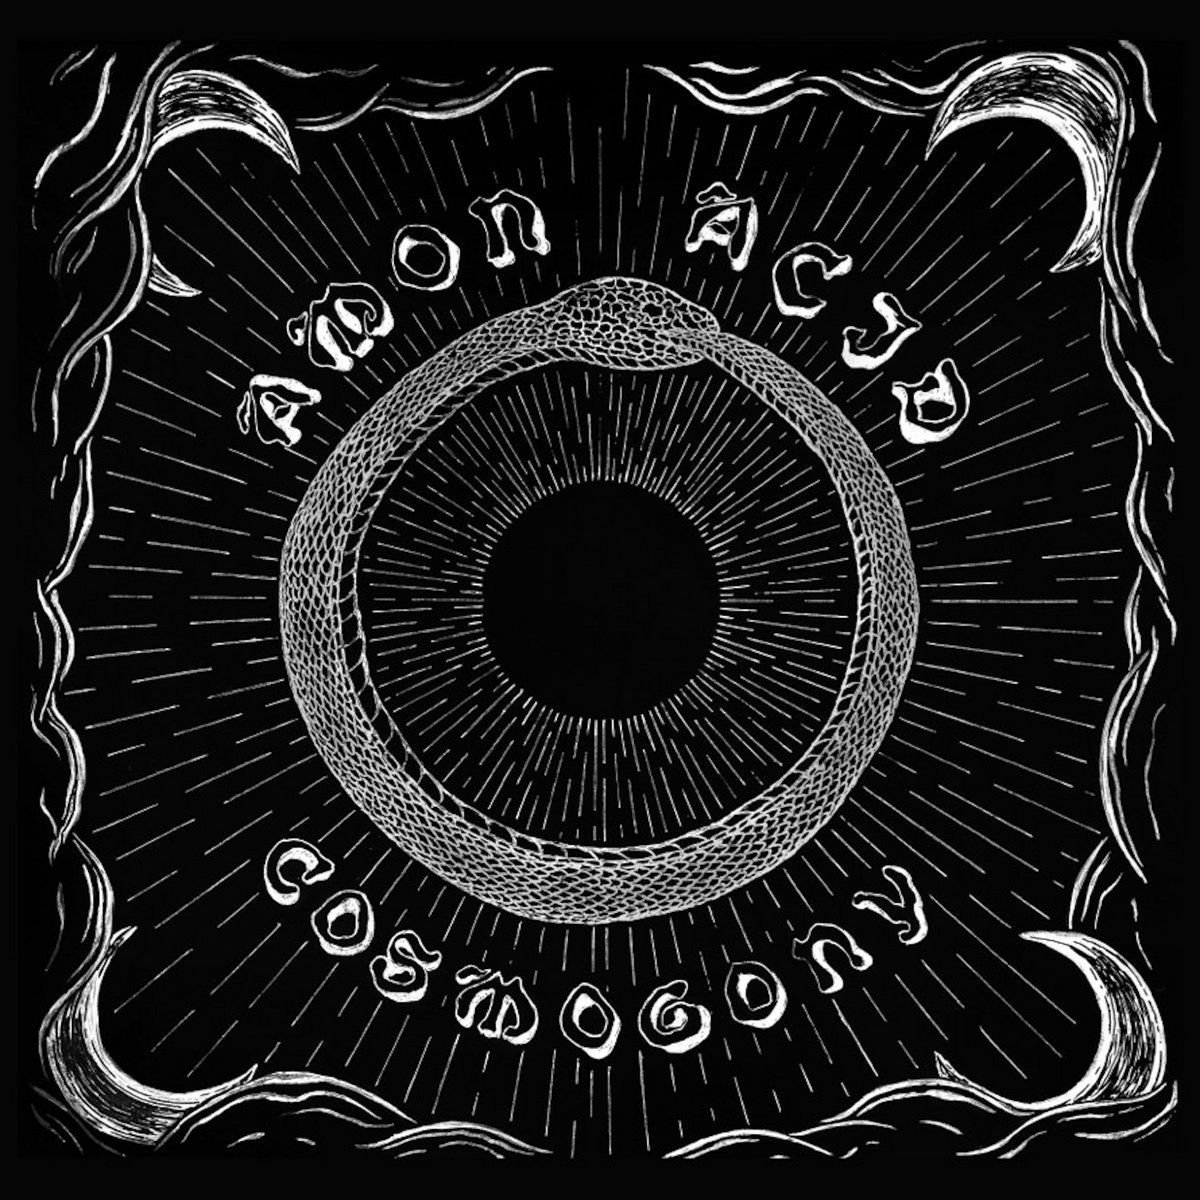 Amon Acid - "Cosmogony" - 2022